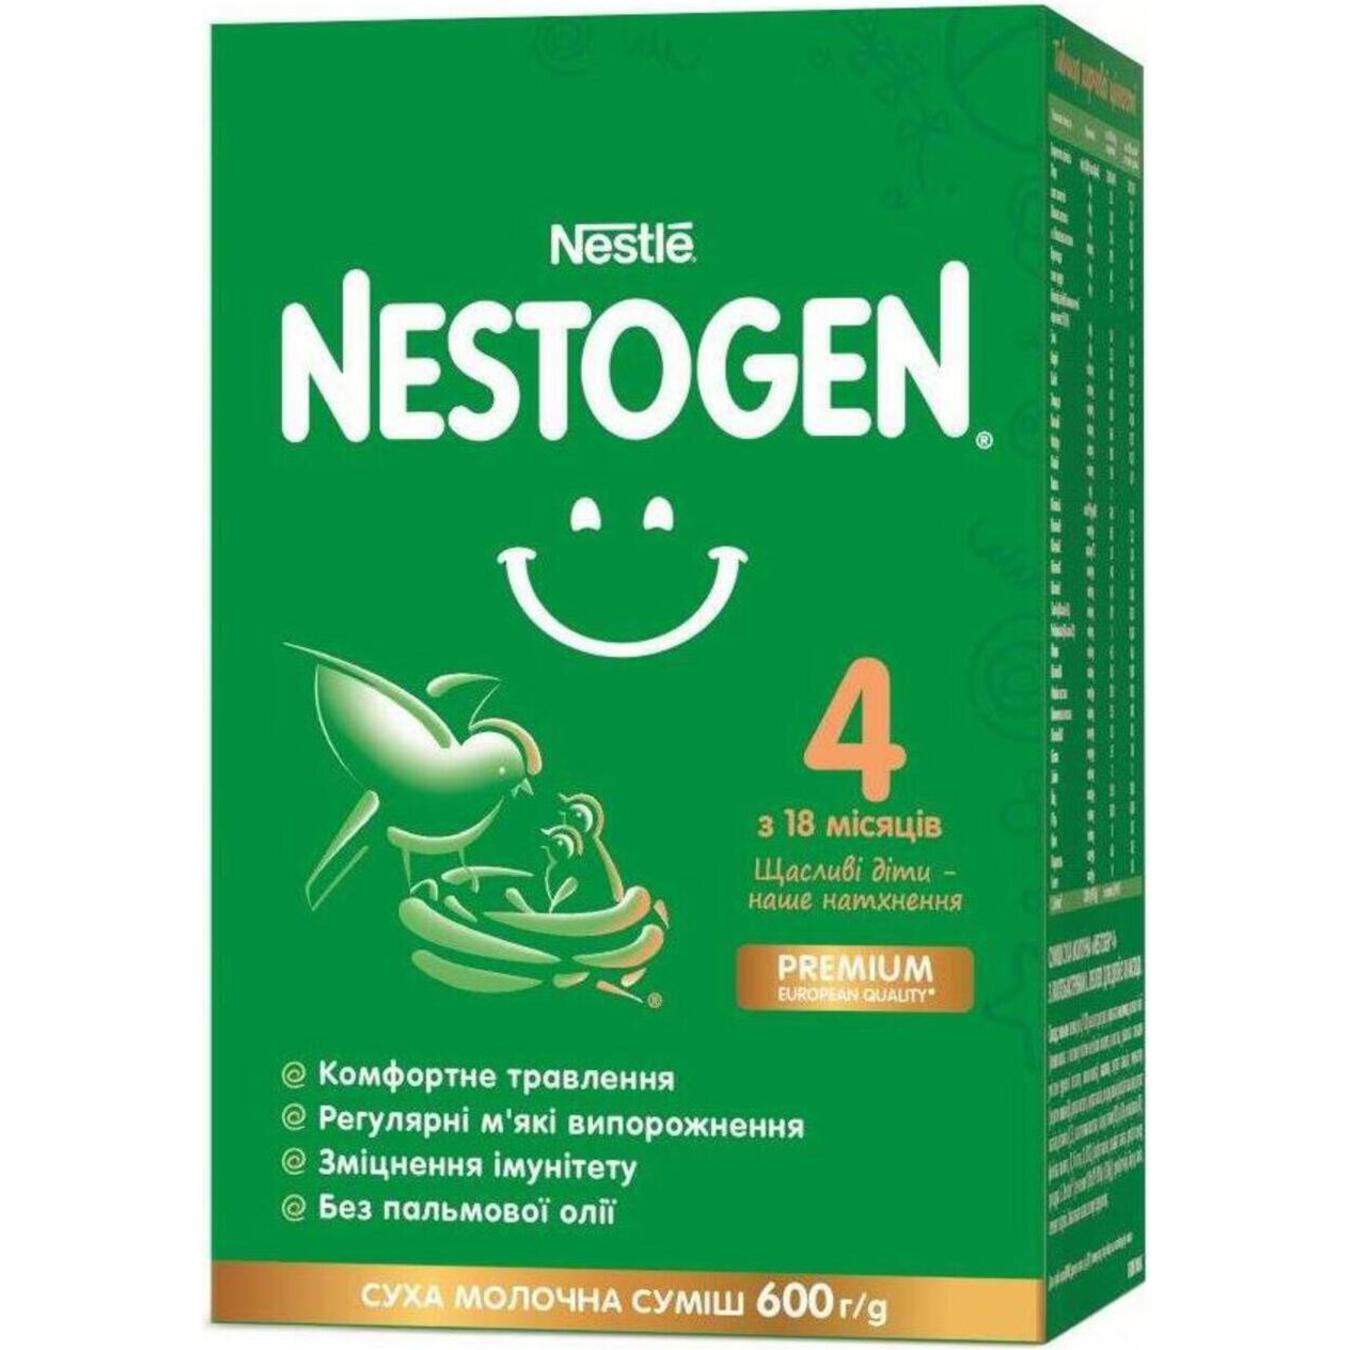 Nestle Nestogen L. Reuteri 4 With Lactobacilli For Babies From 18 Months Dry Milk Mixture 600g